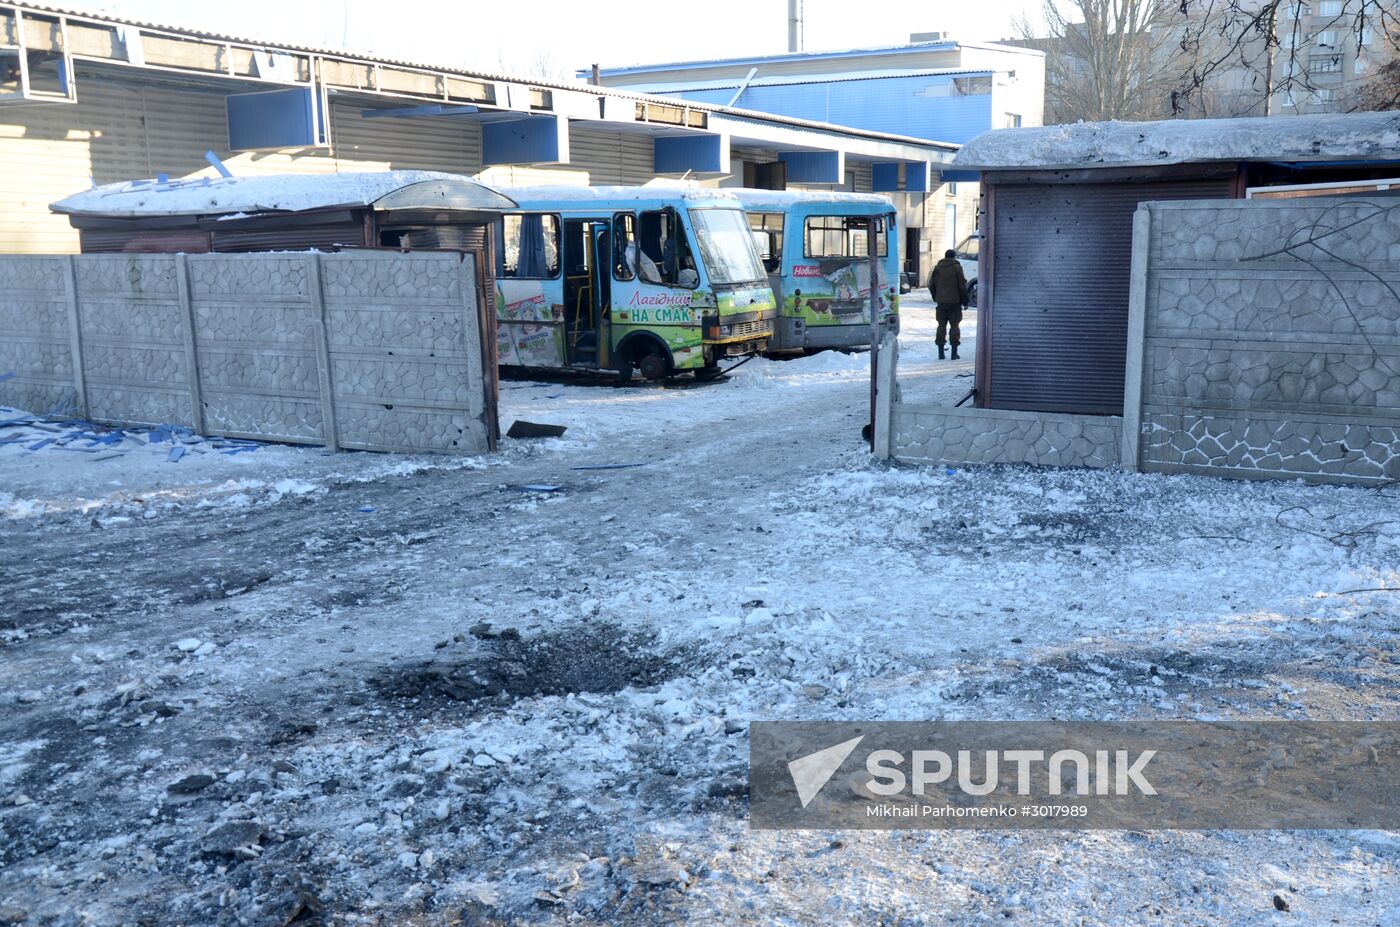 Aftermath of shelling in Donetsk region